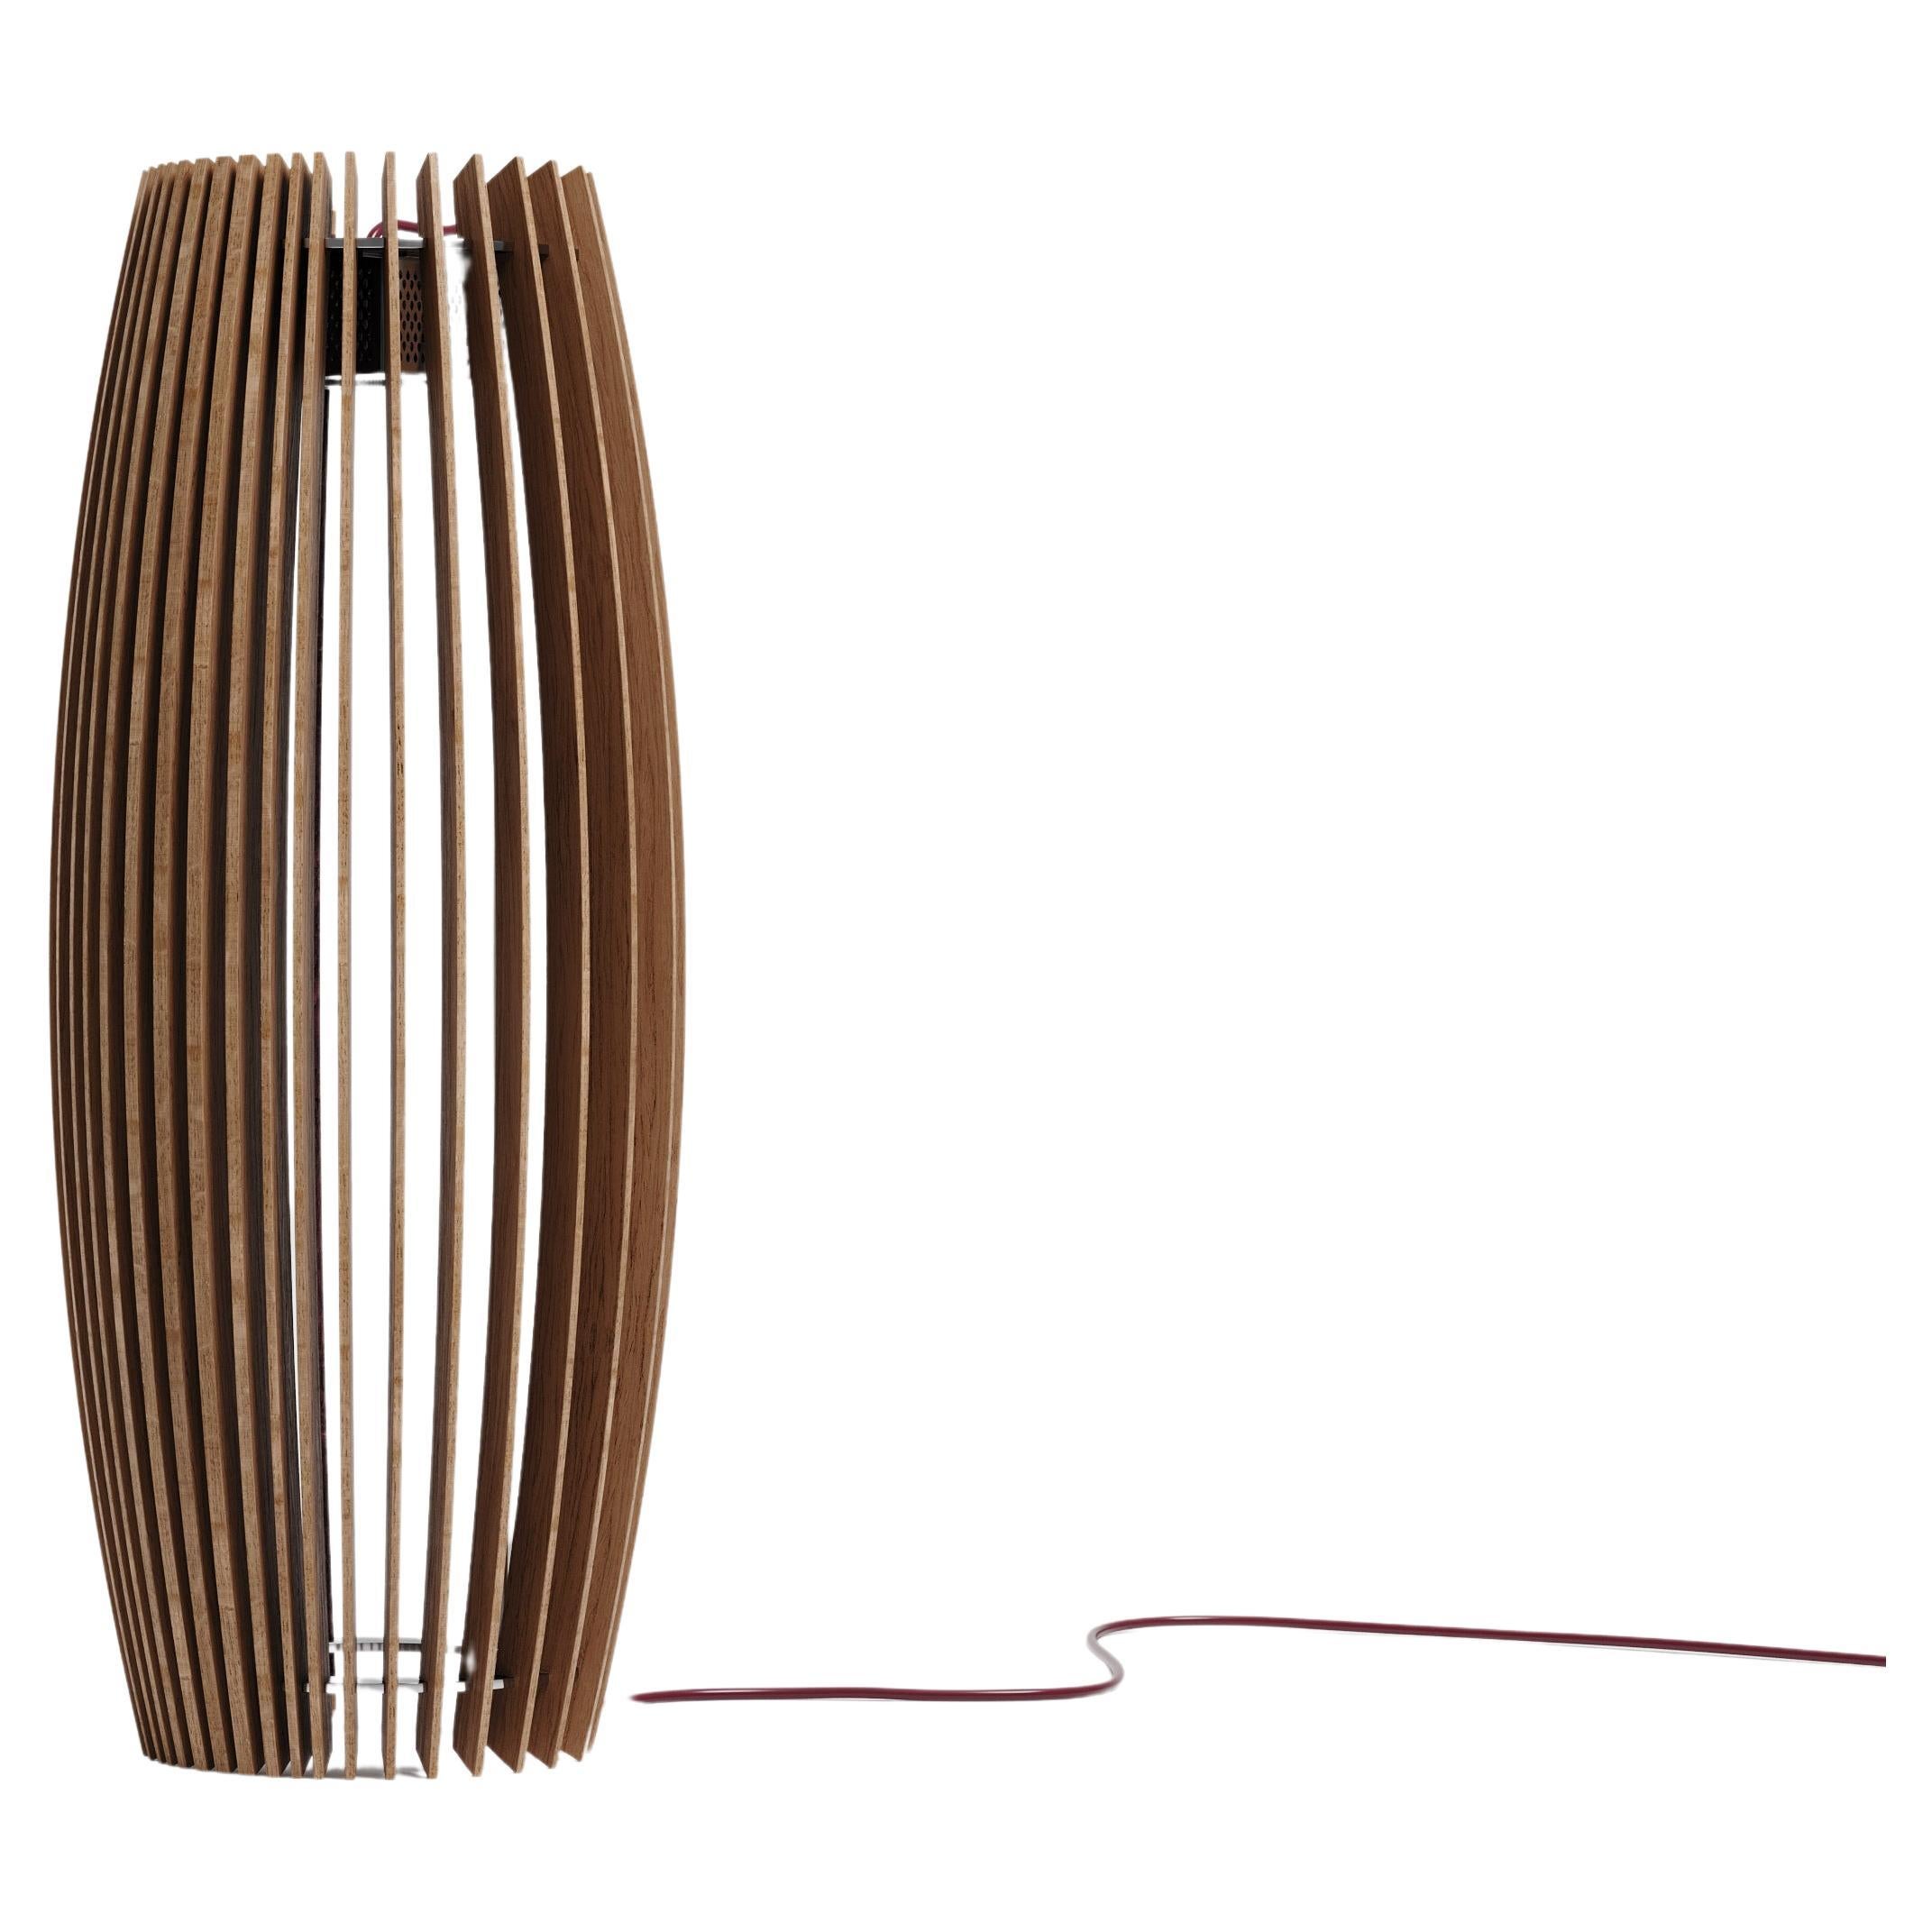 Ibla floor lamp by Winetage handmade in Italy For Sale